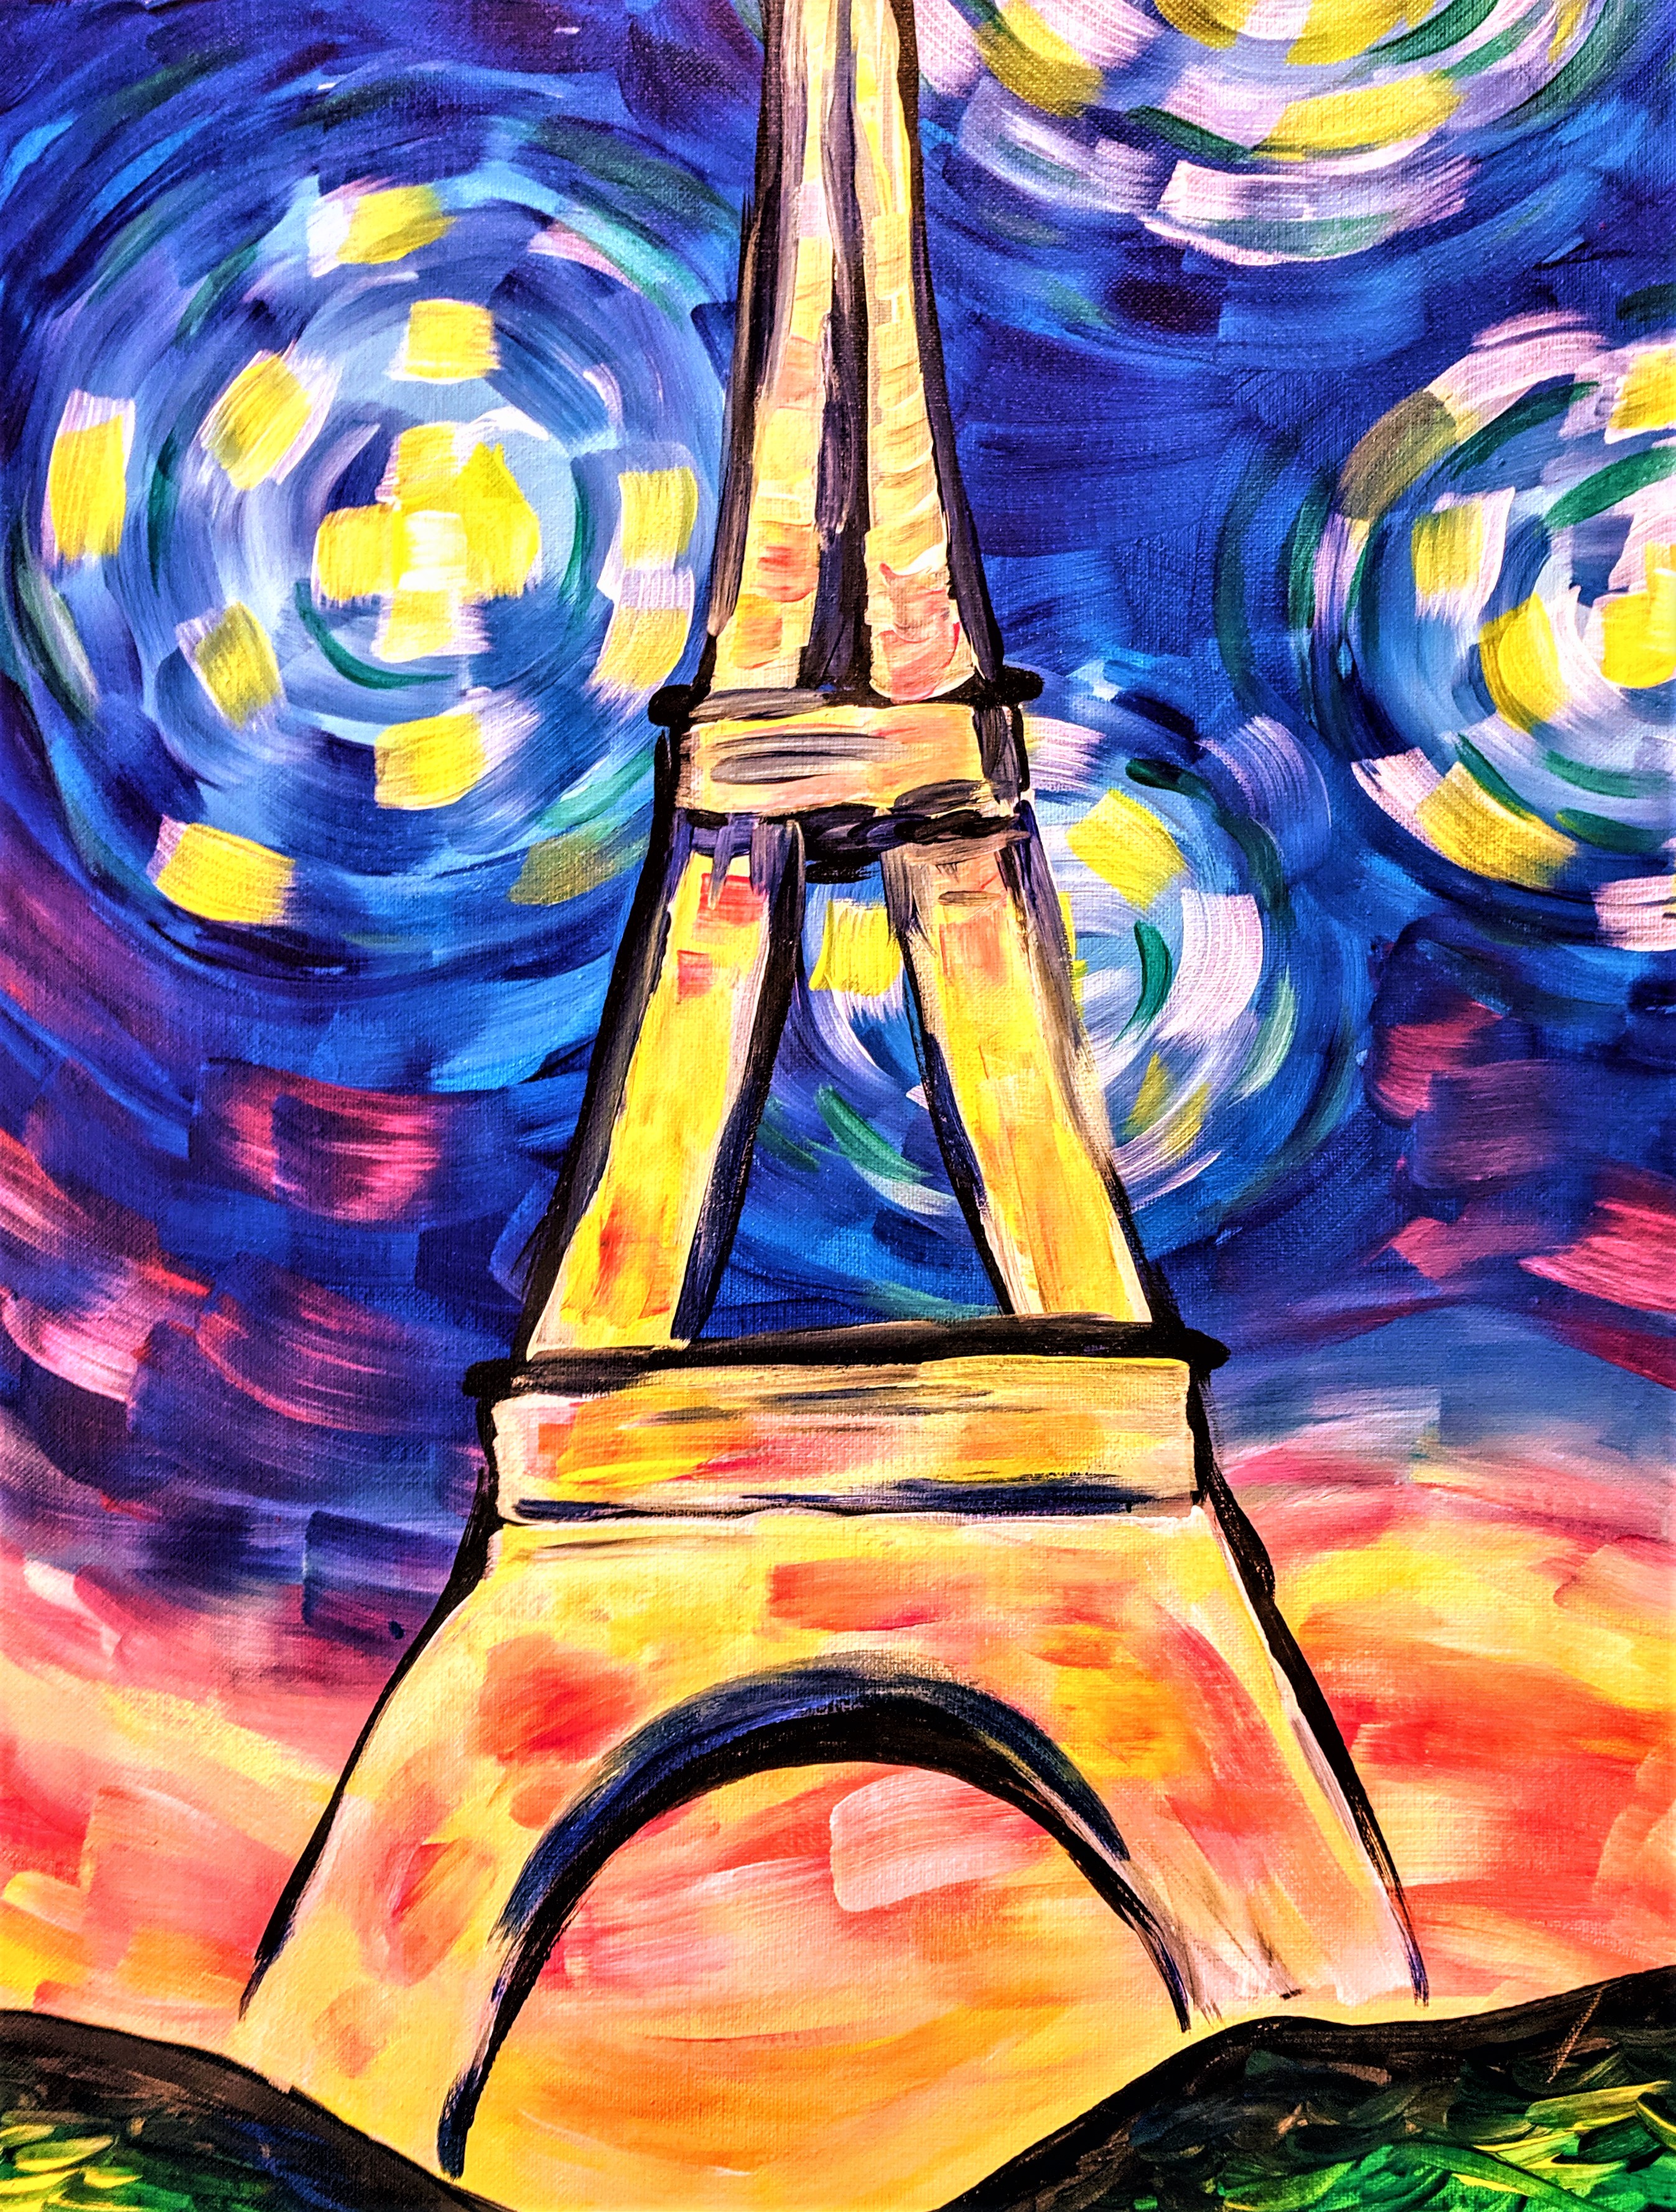 Paris Van Gogh